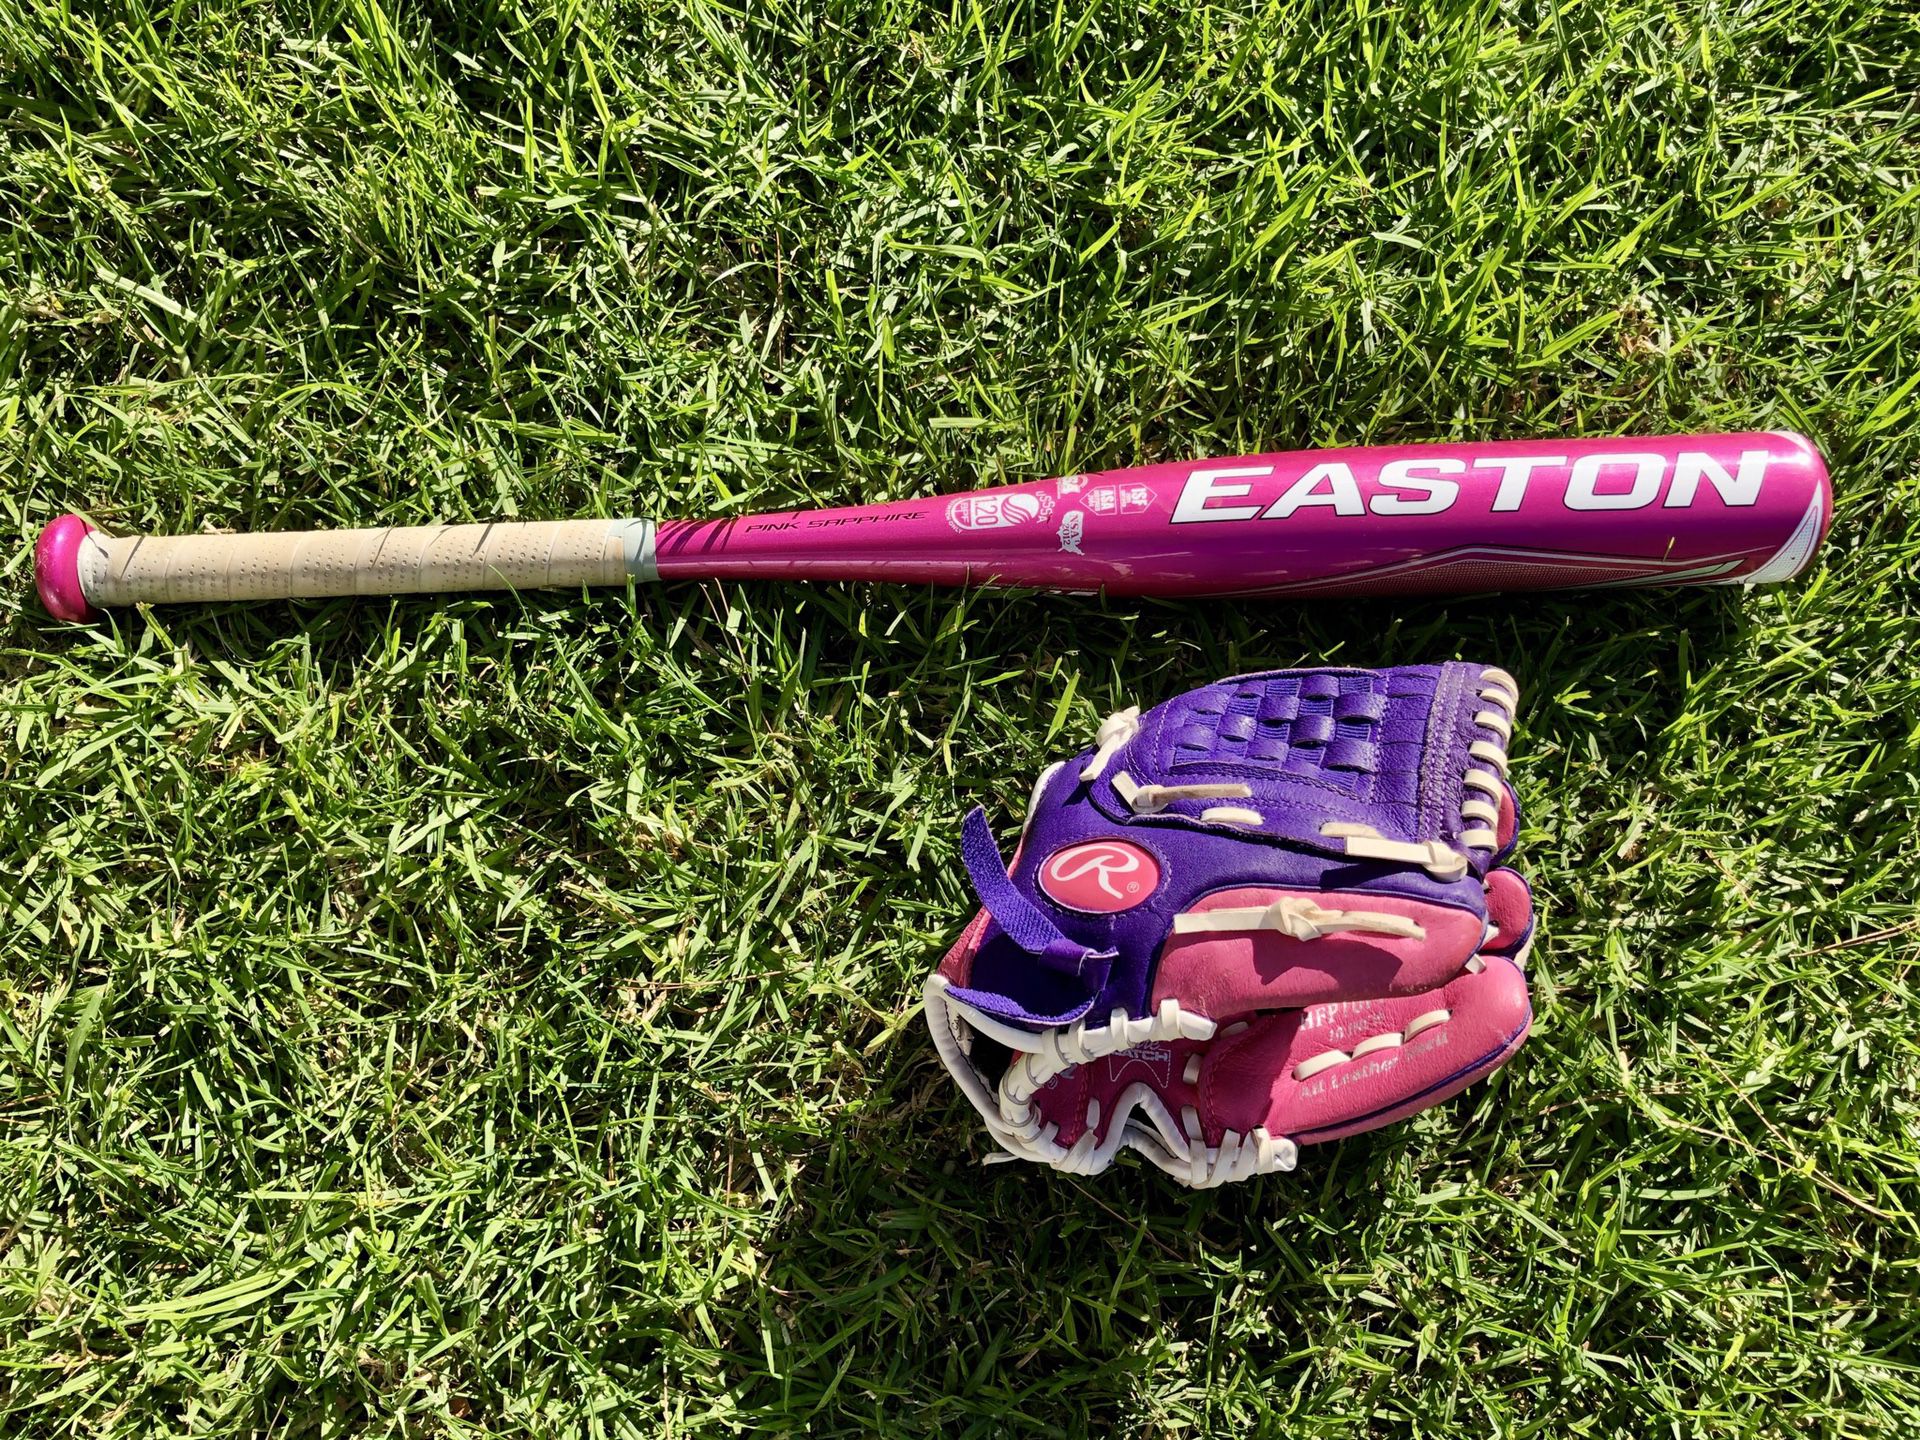 Like new - young girls Easton softball bat and Rawlings glove